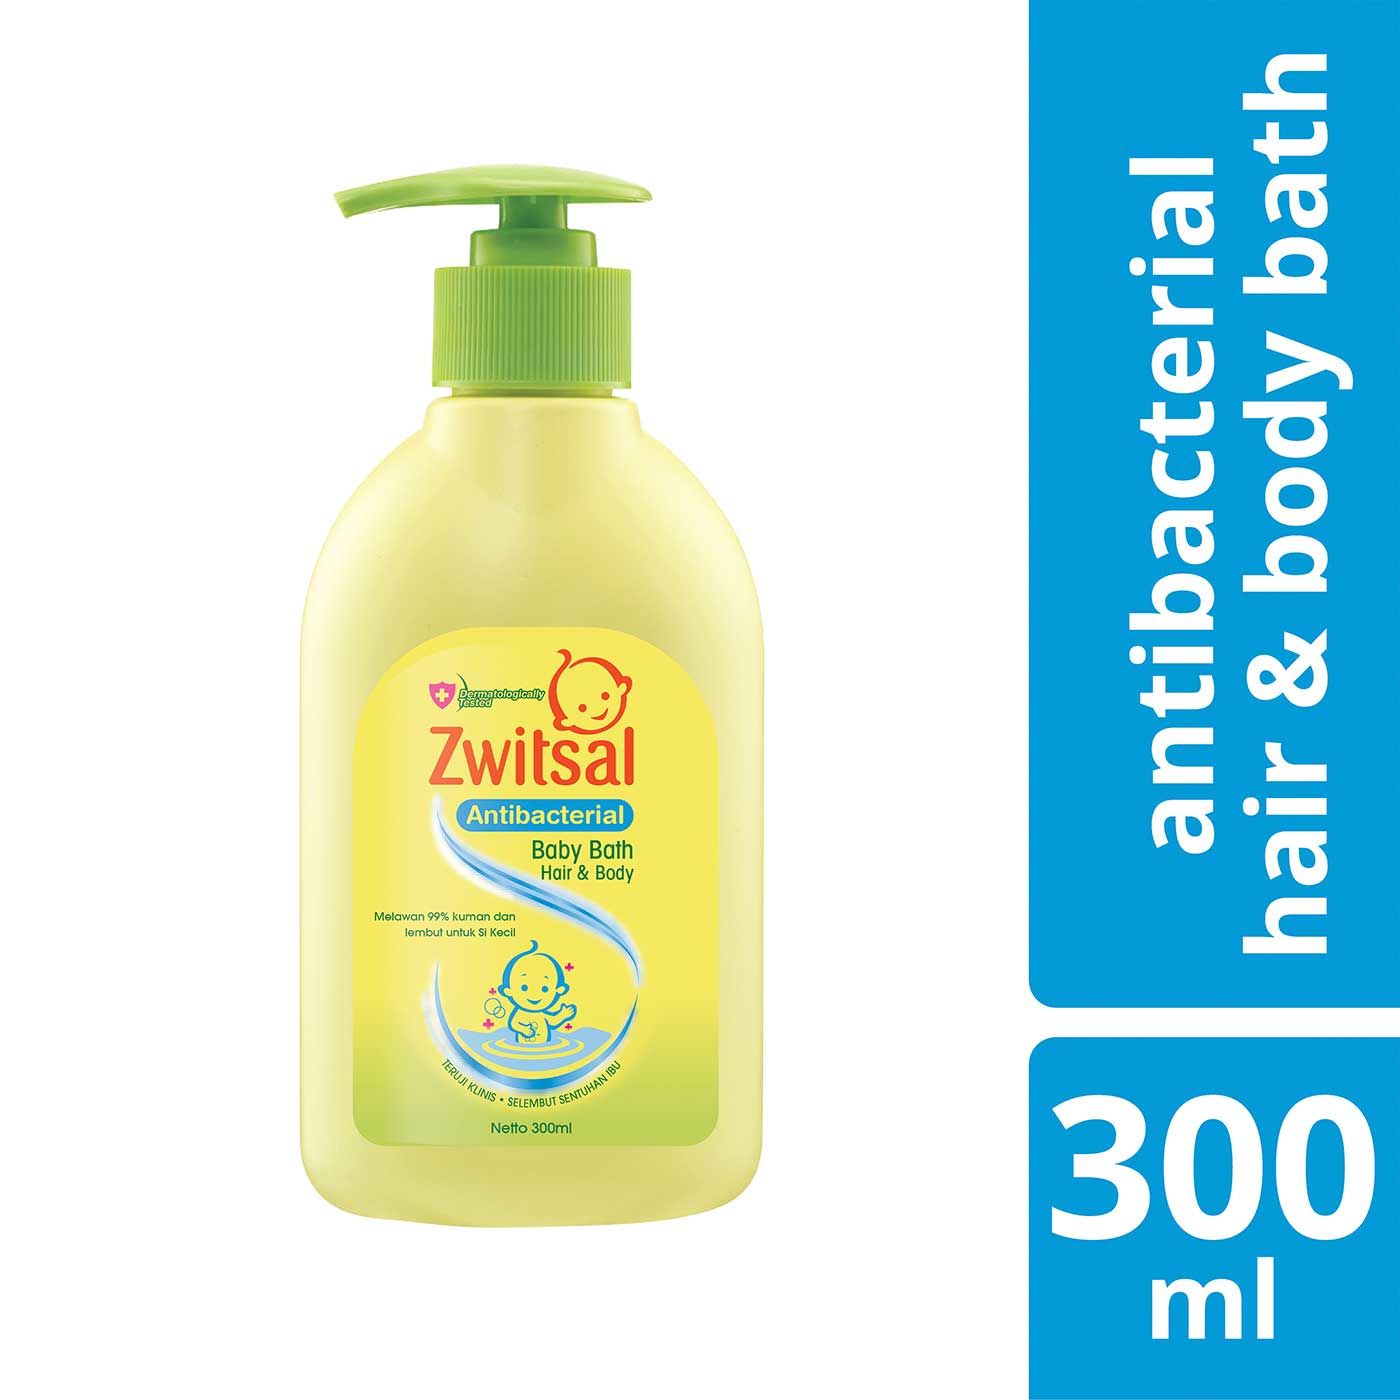 Zwitsal Baby Bath Hair & Body Antibacterial 300ml - 1